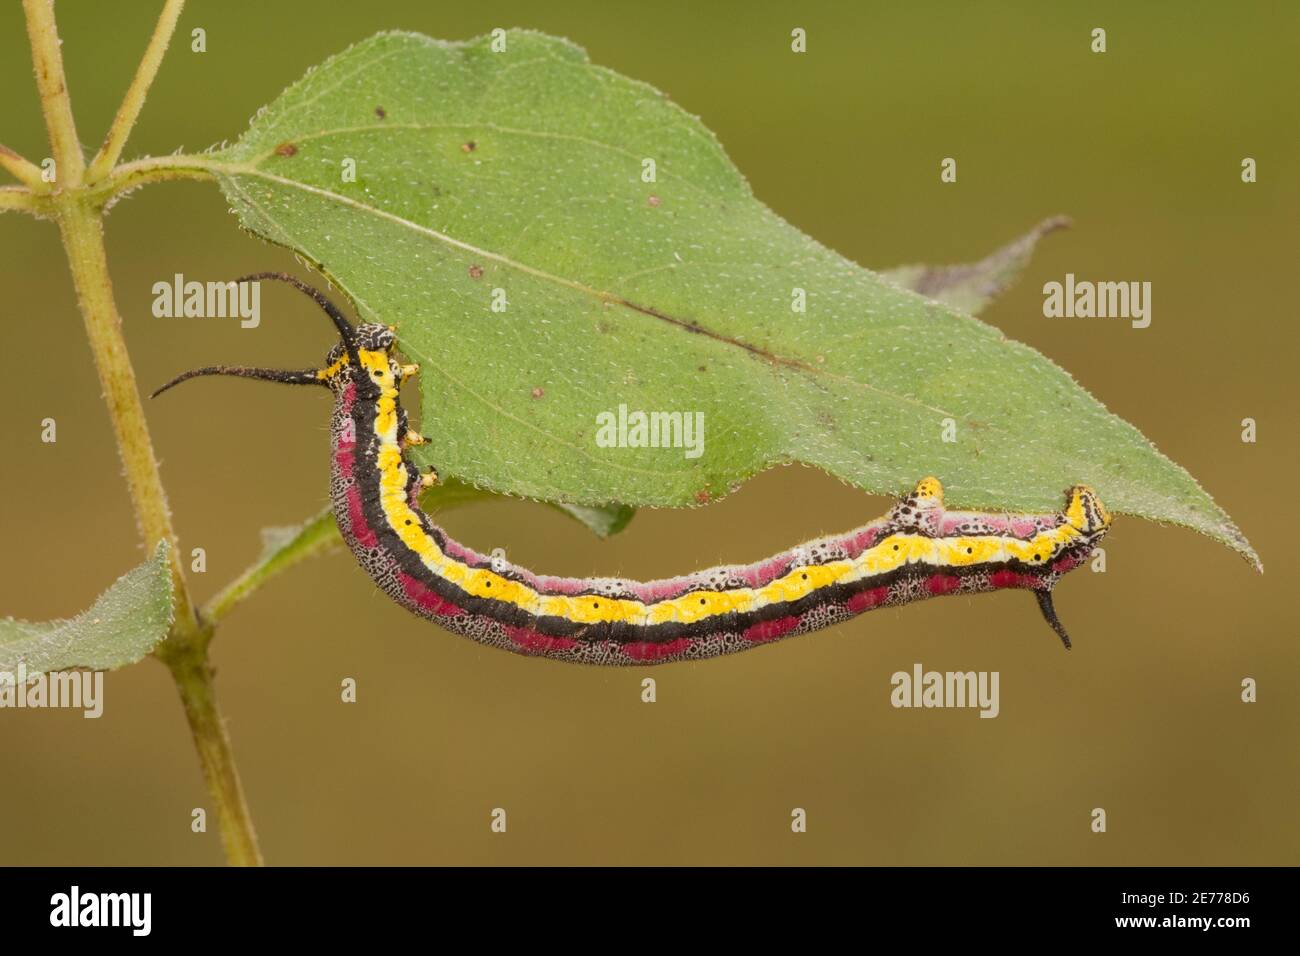 Geometrid Moth larva, Ceratonyx arizonensis, Geometridae. Length 52 mm. Feeding on Heartleaf Goldeneye, Viguiera cordifolia. Same as 14091126-14091166 Stock Photo